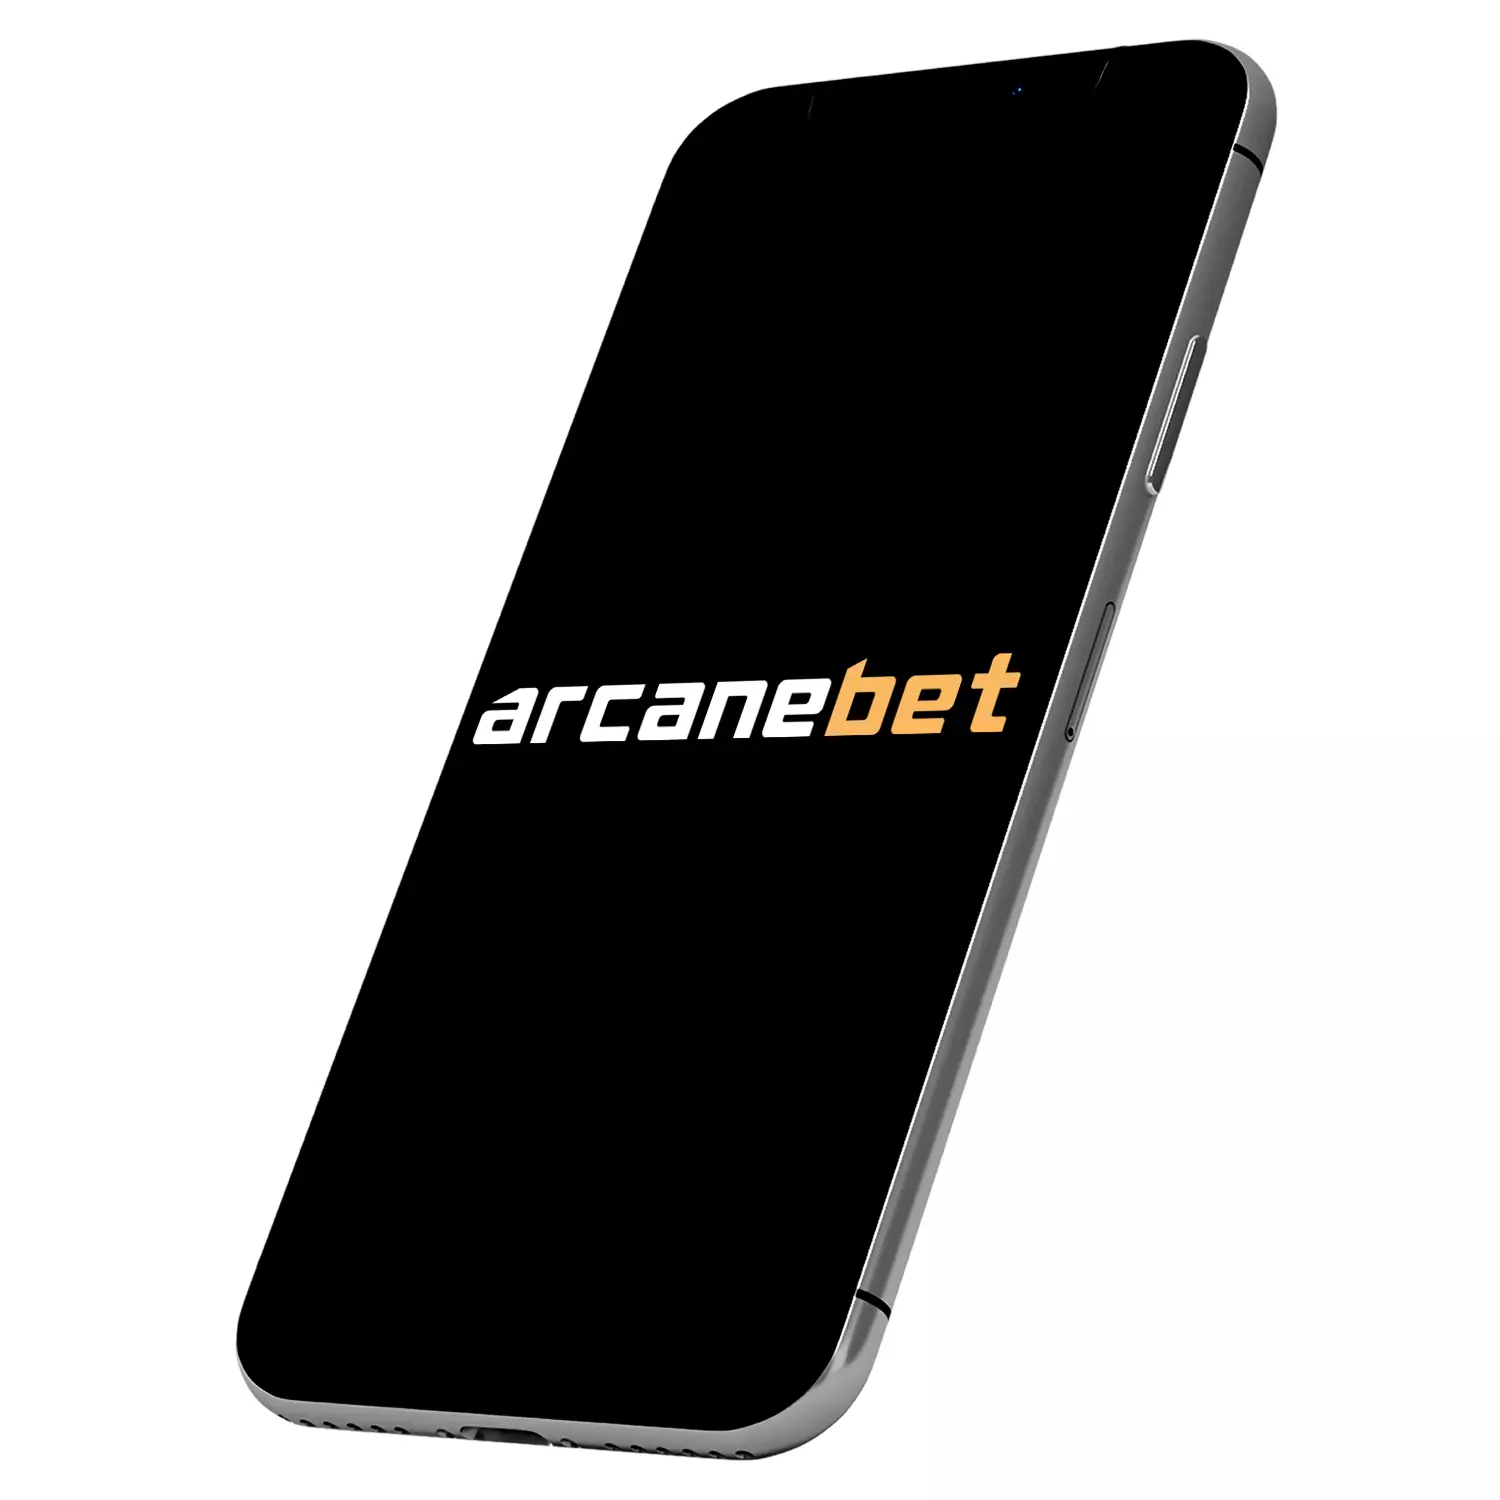 The Arcanebet mobile app is still under development.